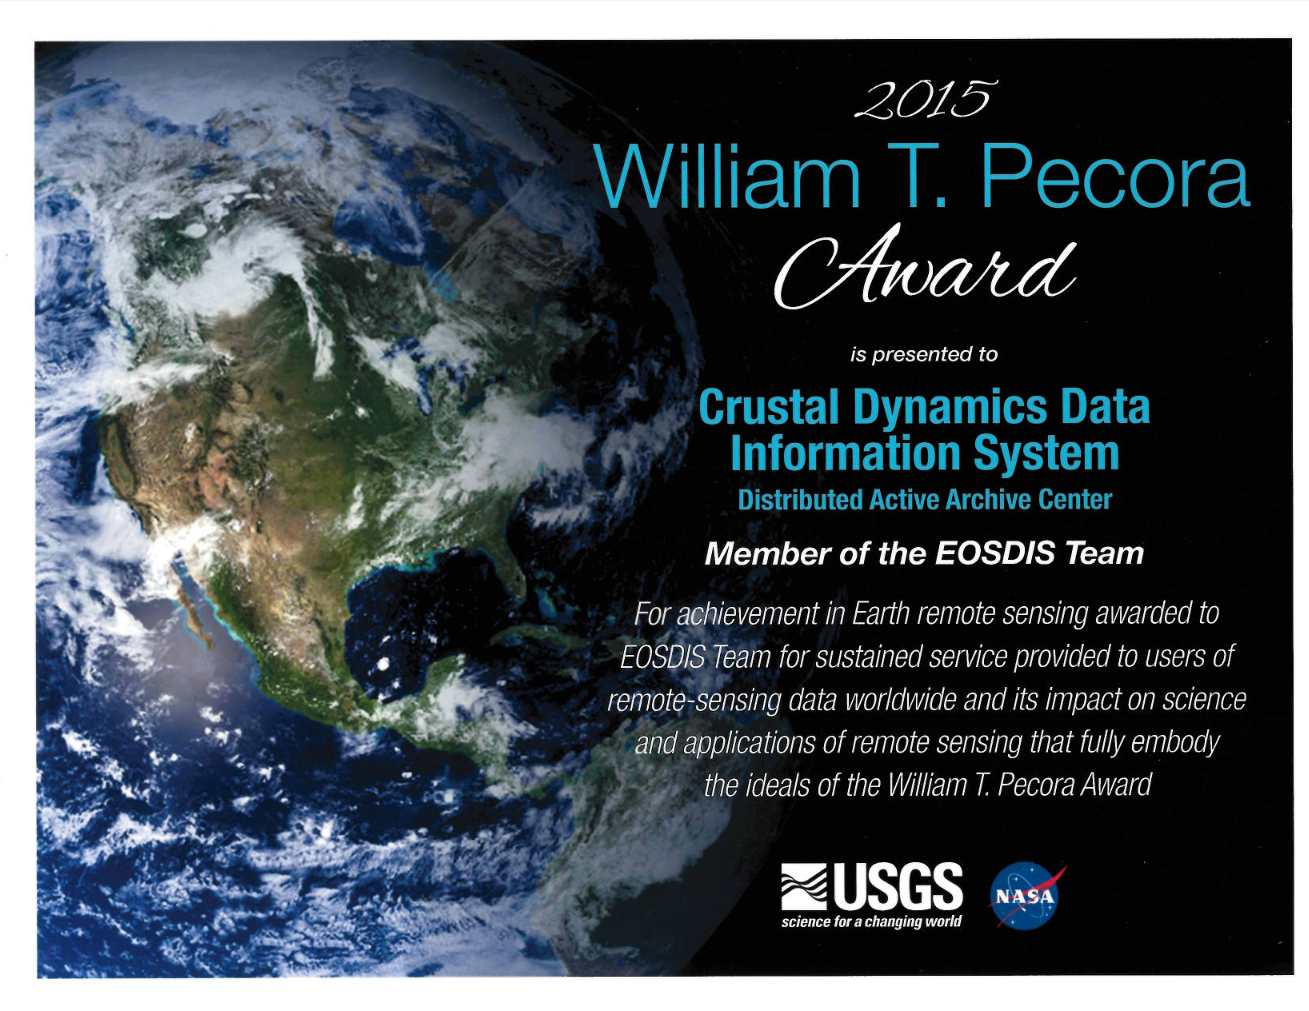 William T Pecora Award Certificate for 2015 for the NASA CDDIS